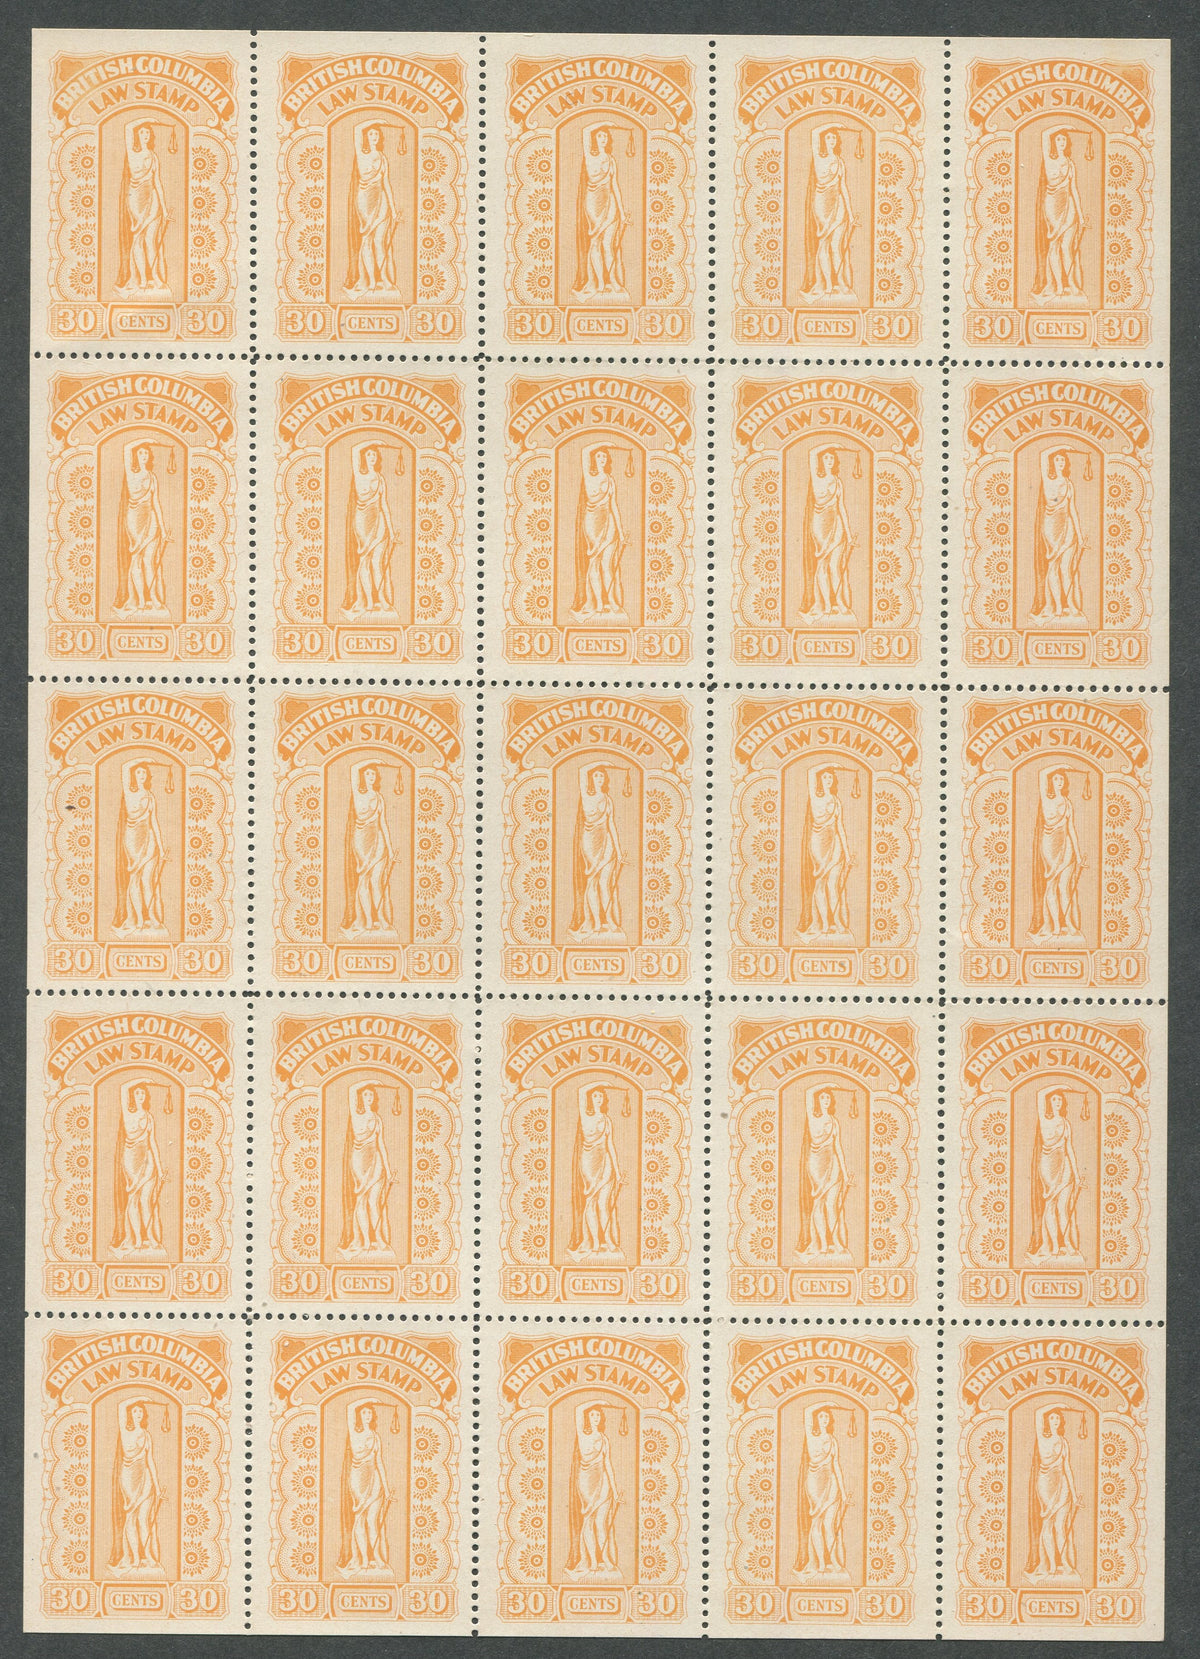 0038BC2007 - BCL38, BCL38b - Mint Sheets of 25